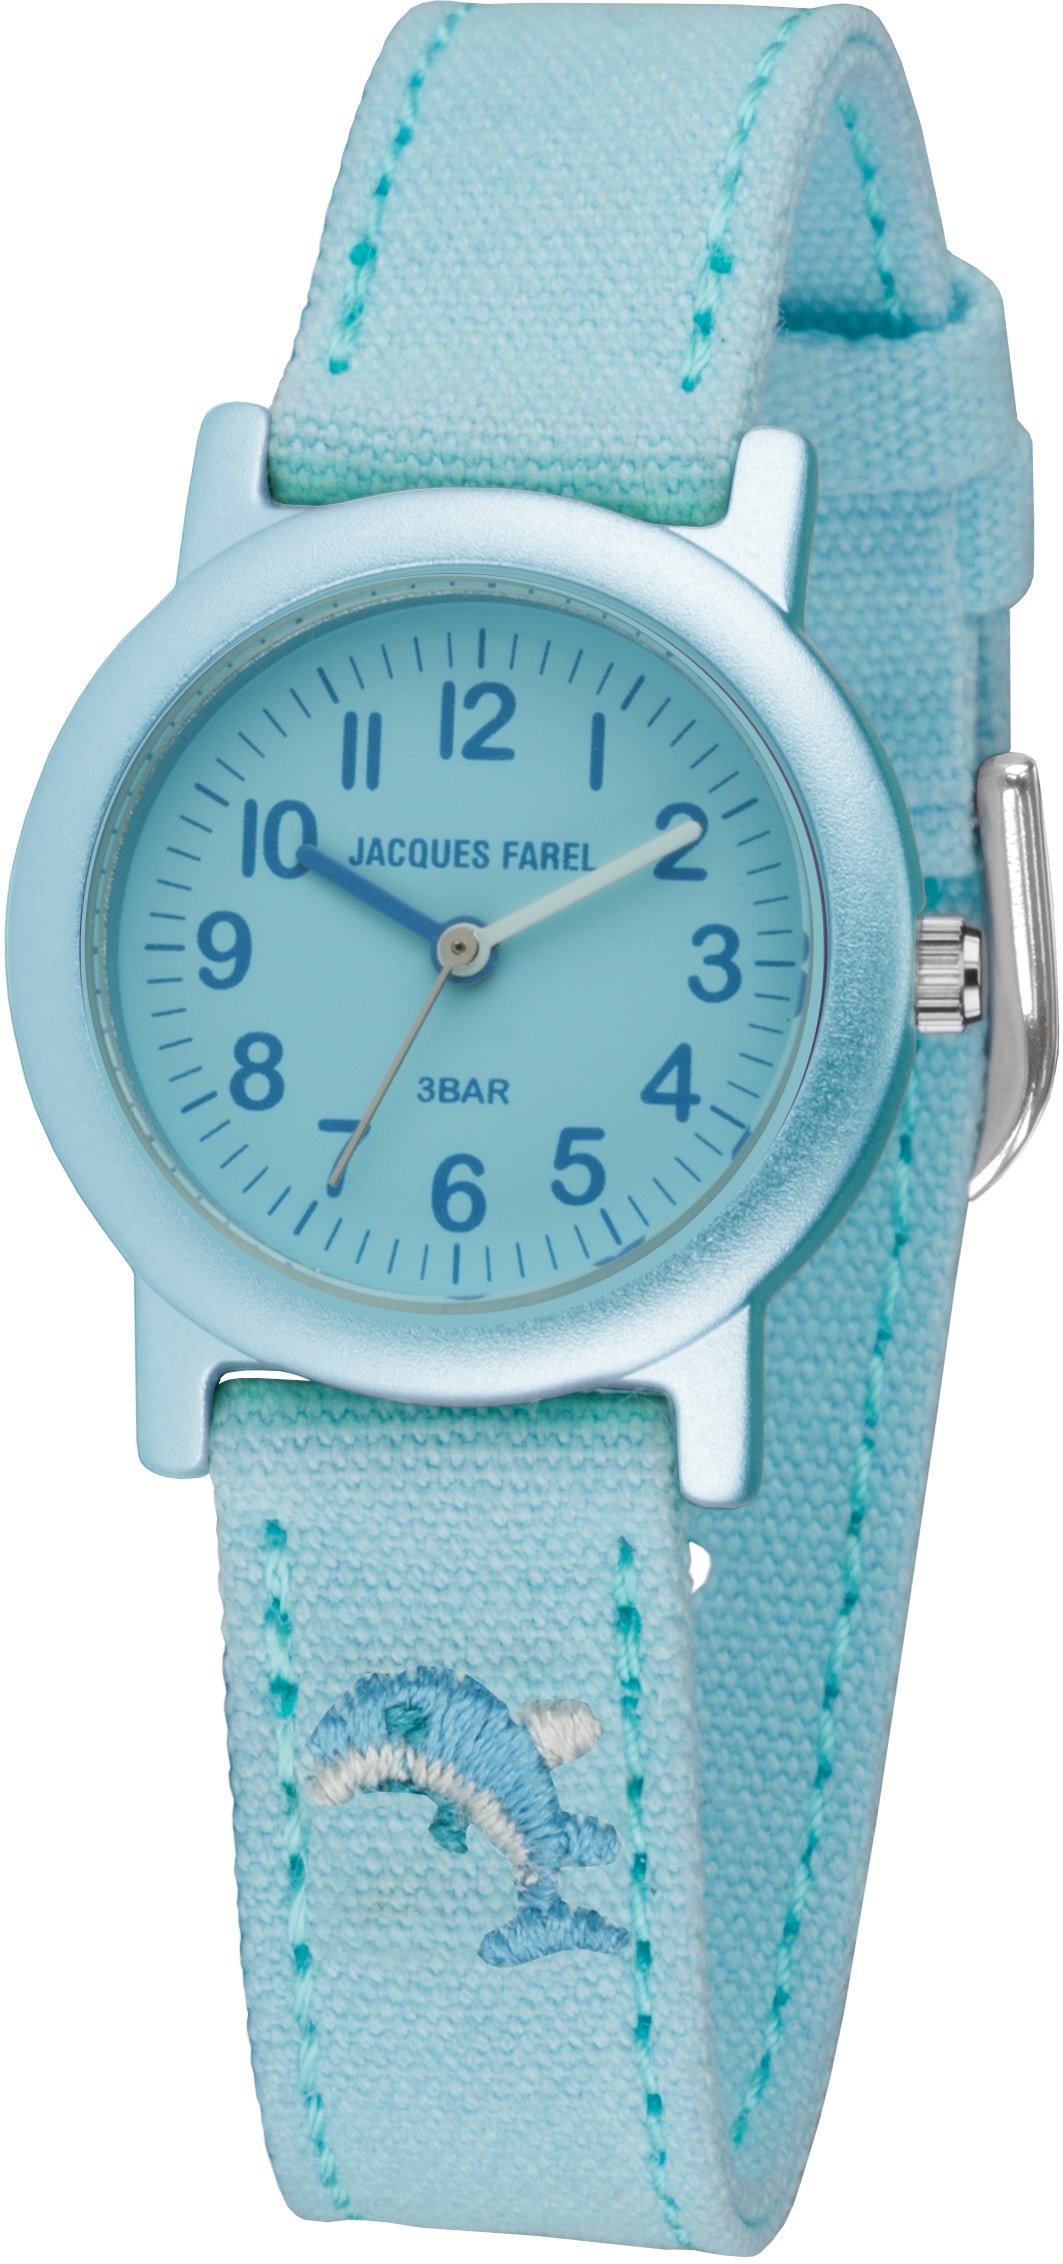 Jacques Farel Quarzuhr »ORG 6665, Delphinuhr«, Armbanduhr, Kinderuhr, ideal auch als Geschenk, mit Delfinmotiv